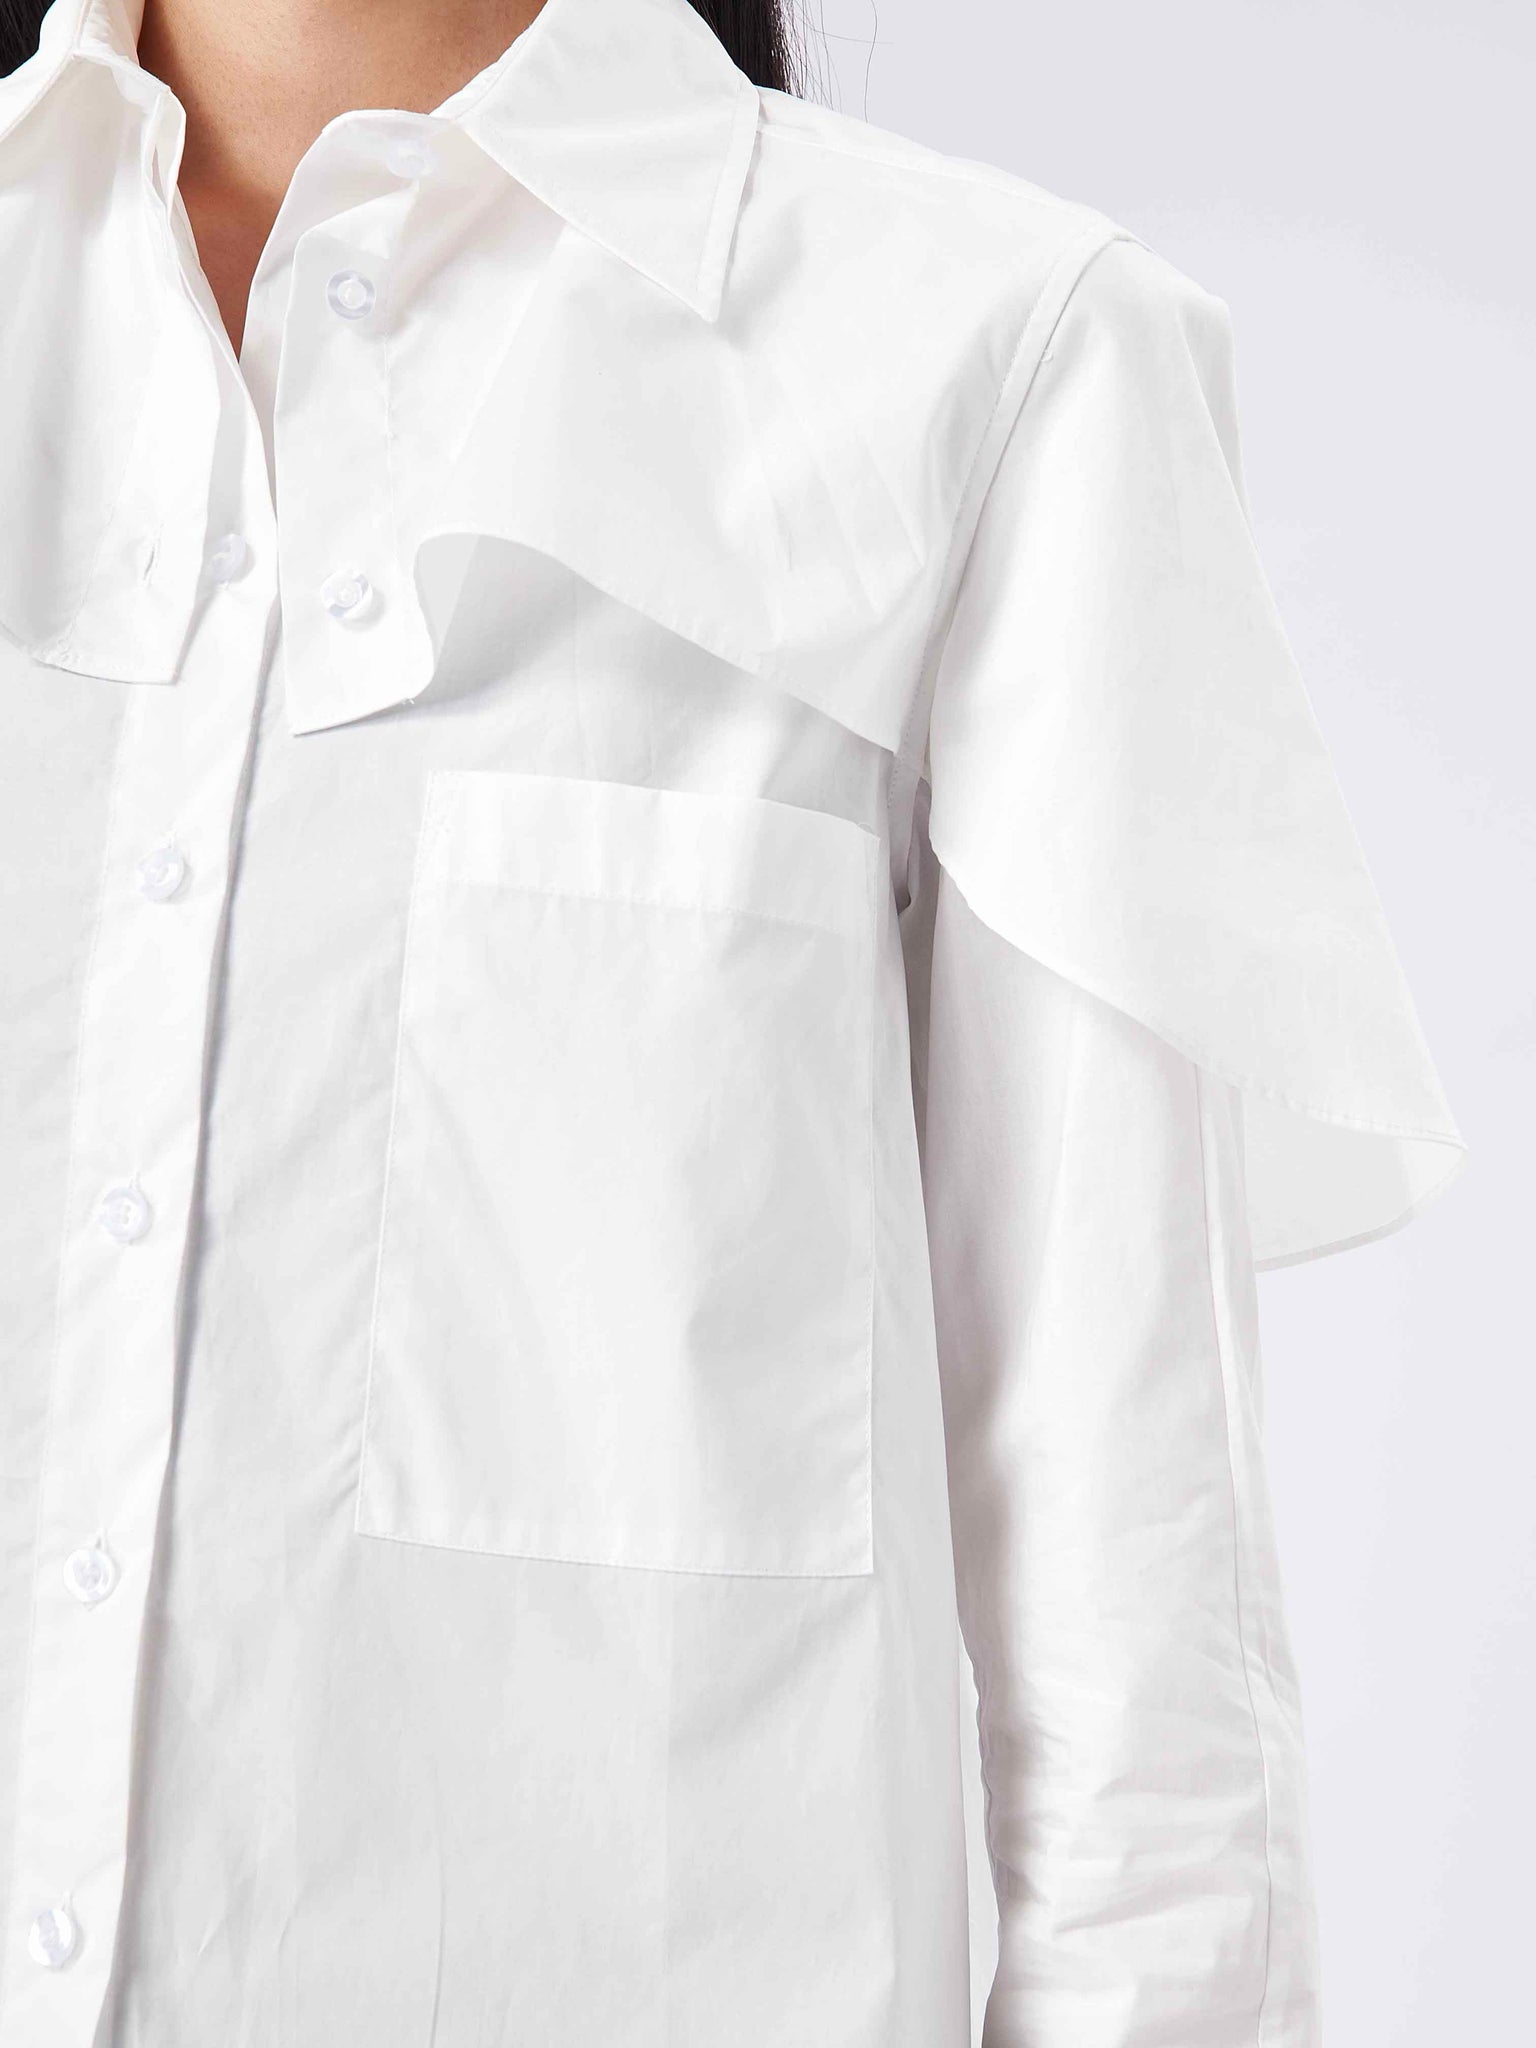 Layers Ruffle Shirt White